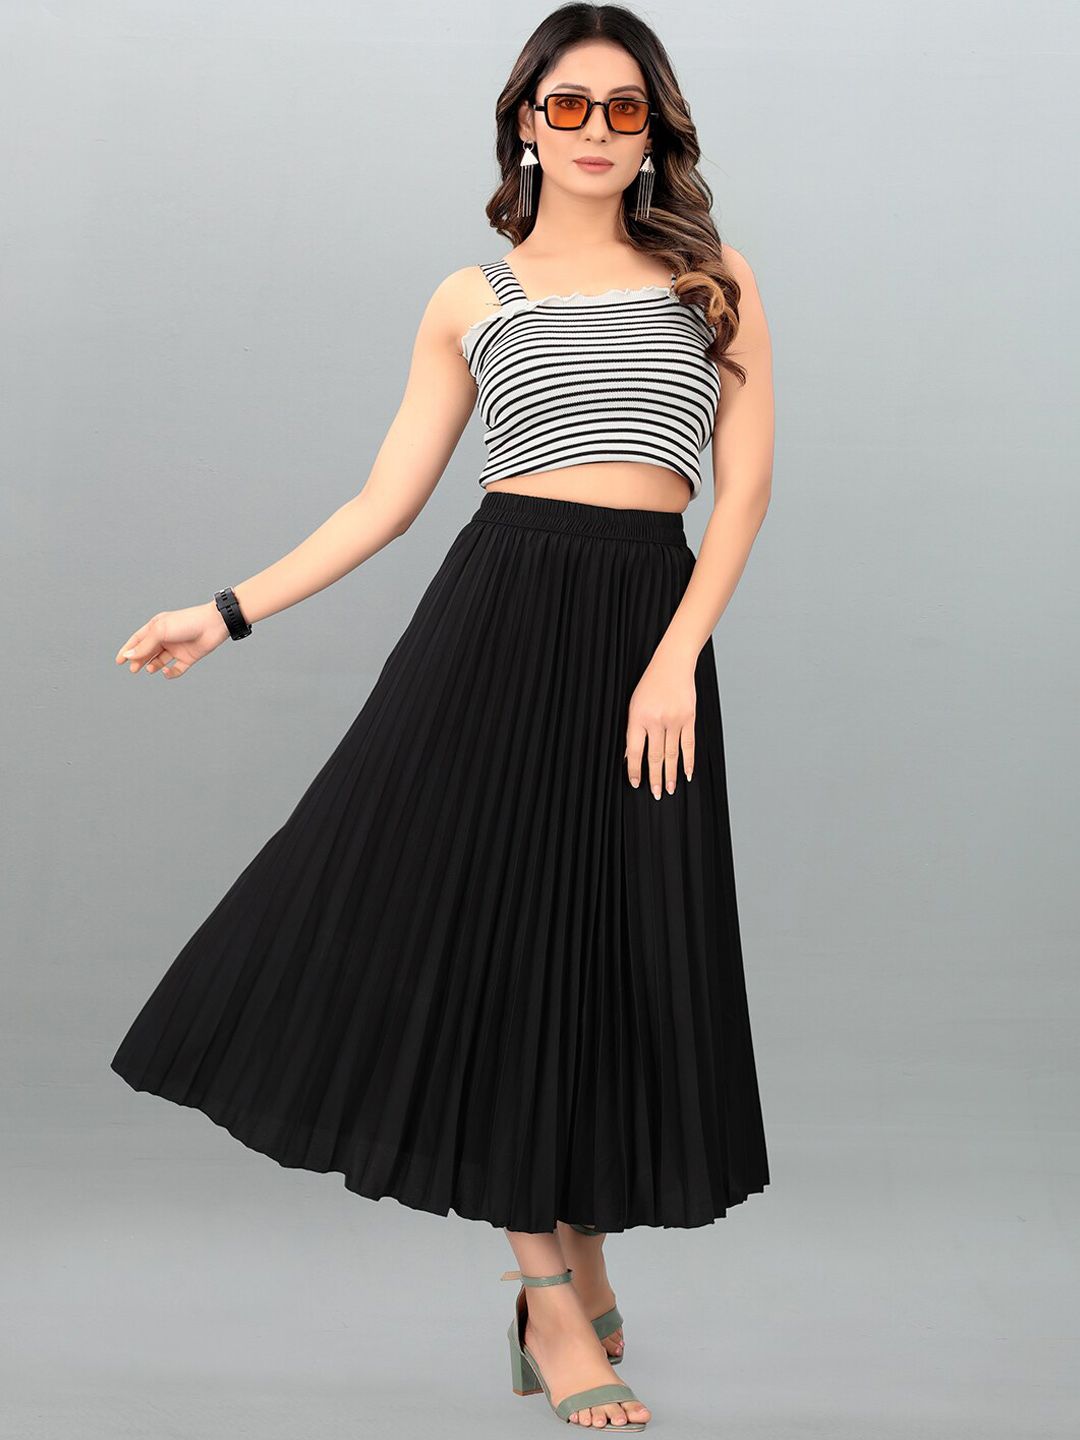 DEKLOOK Pleated A-Line Midi Skirt Price in India